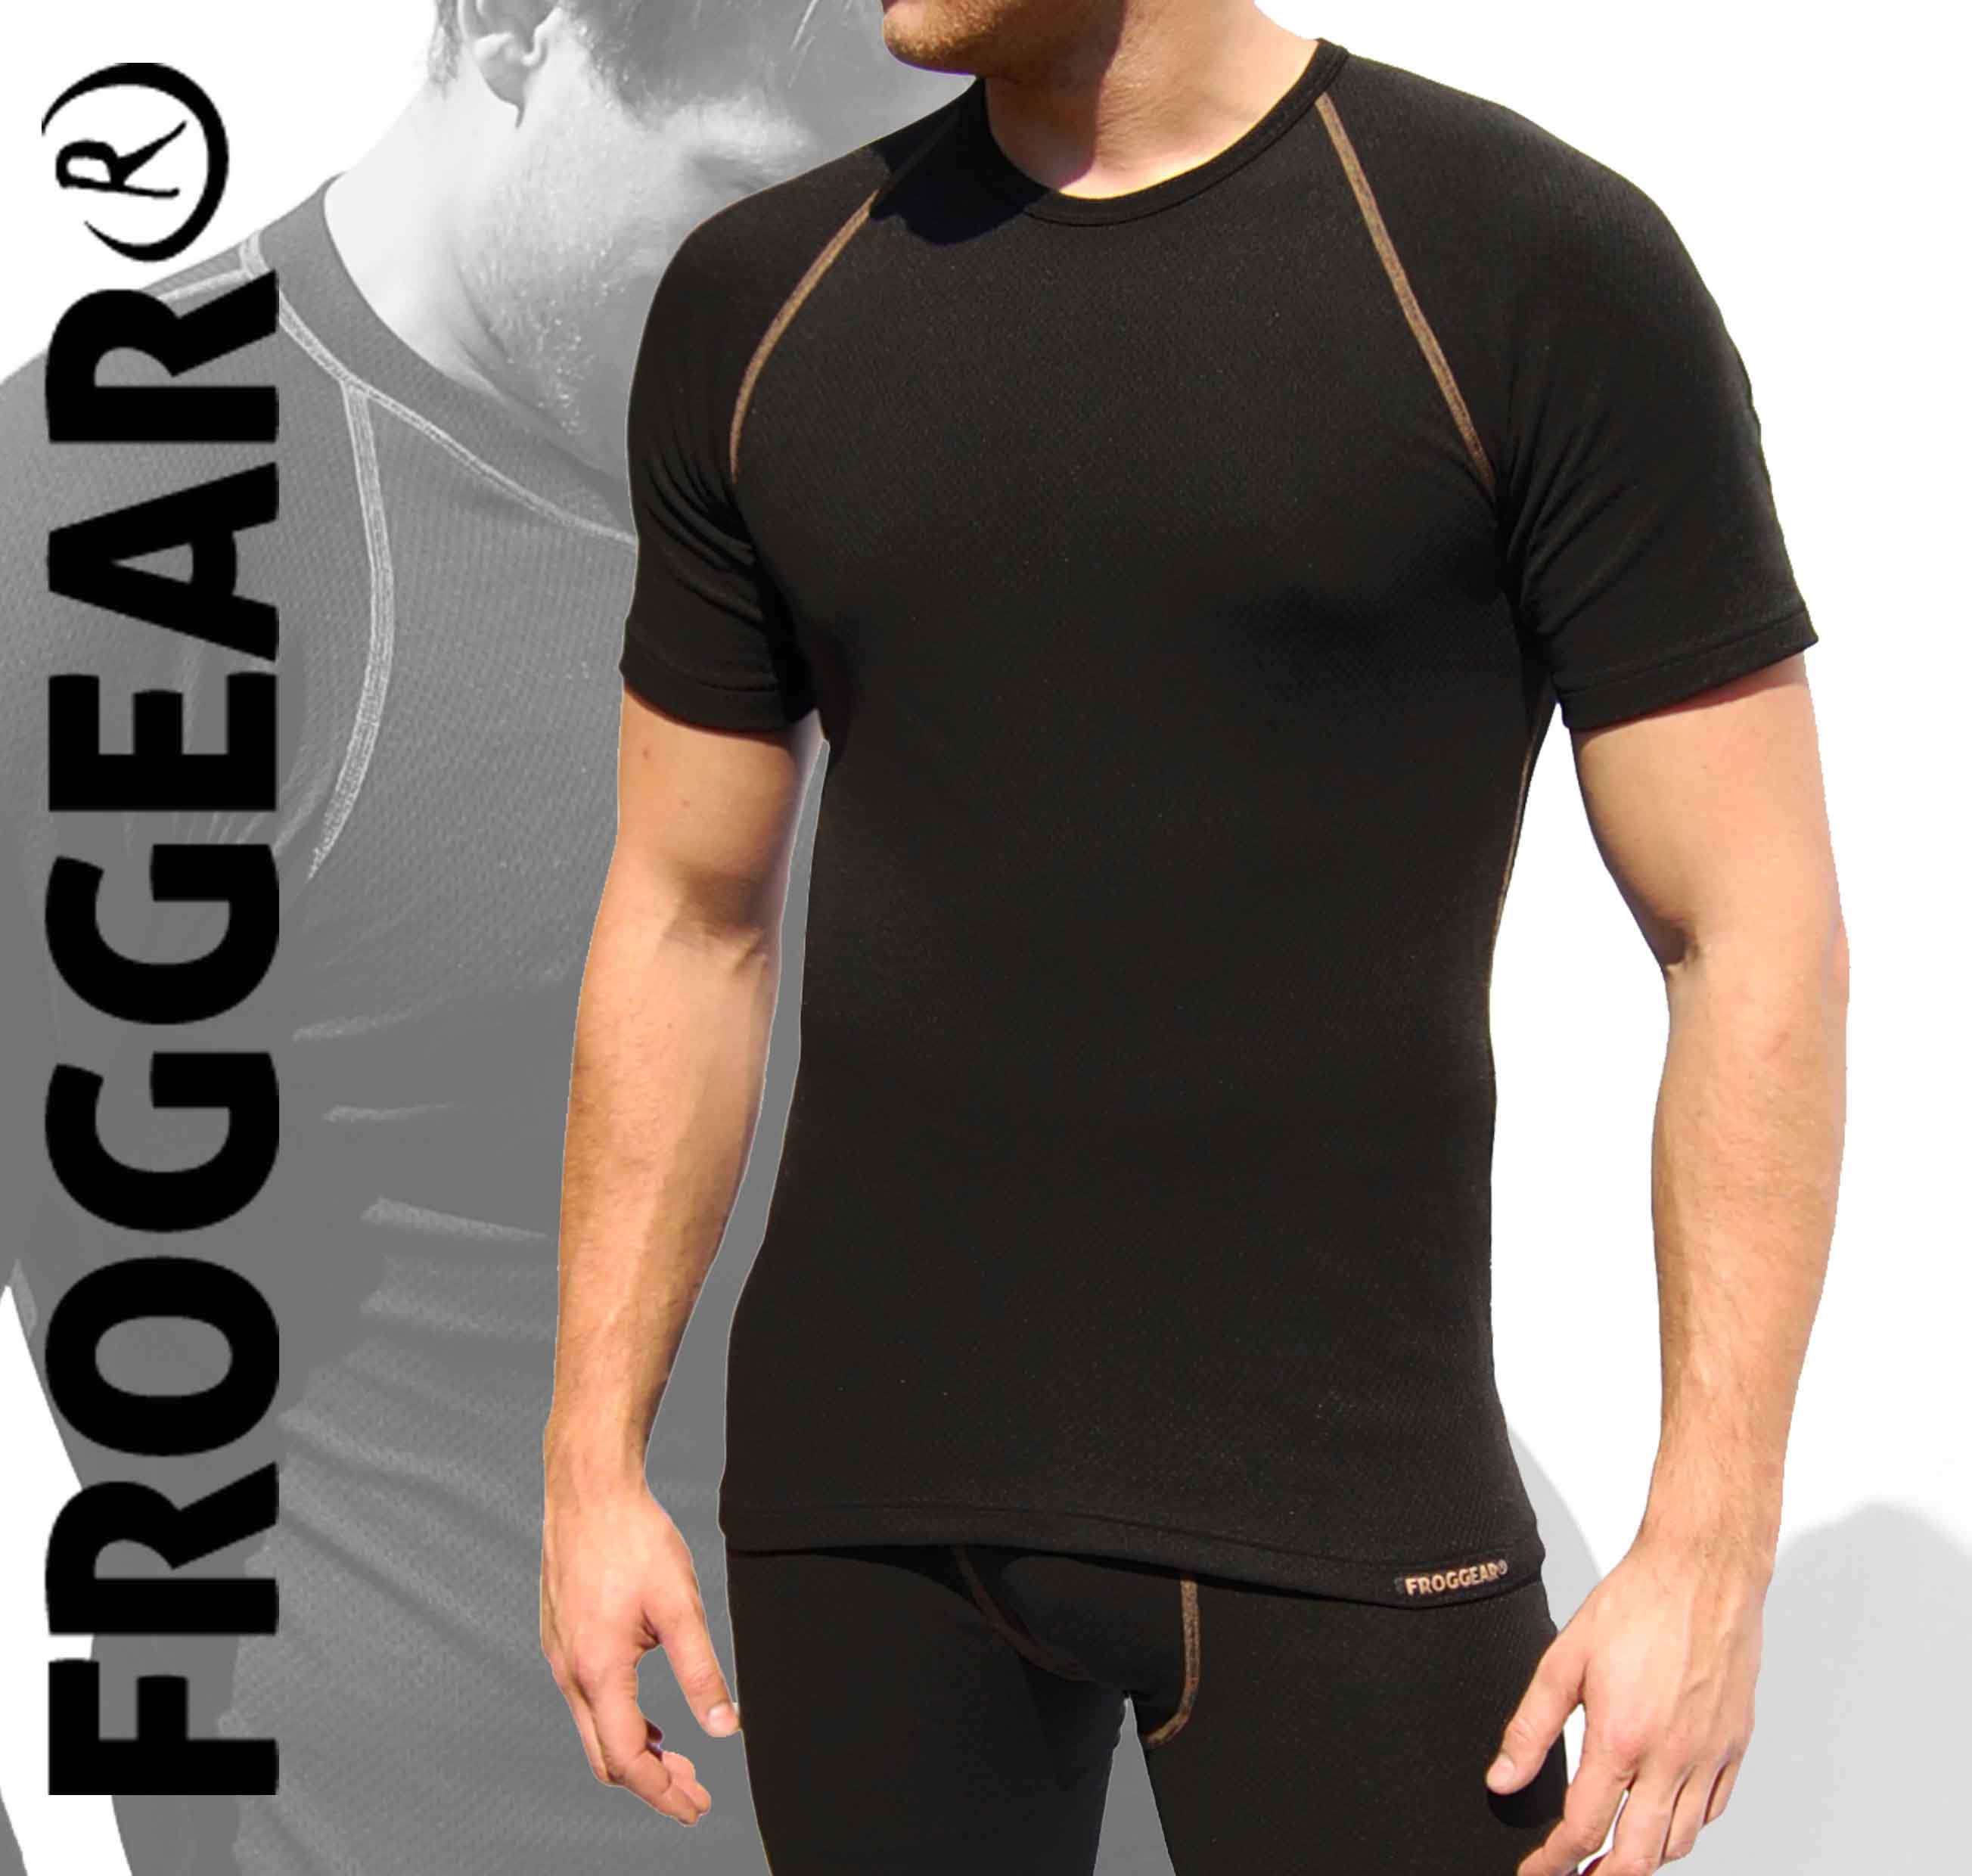 FROGGEAR® Mediator - pánské triko s krátkým rukávem | FROGTAC.cz -  military, tactical and outdoor equipment